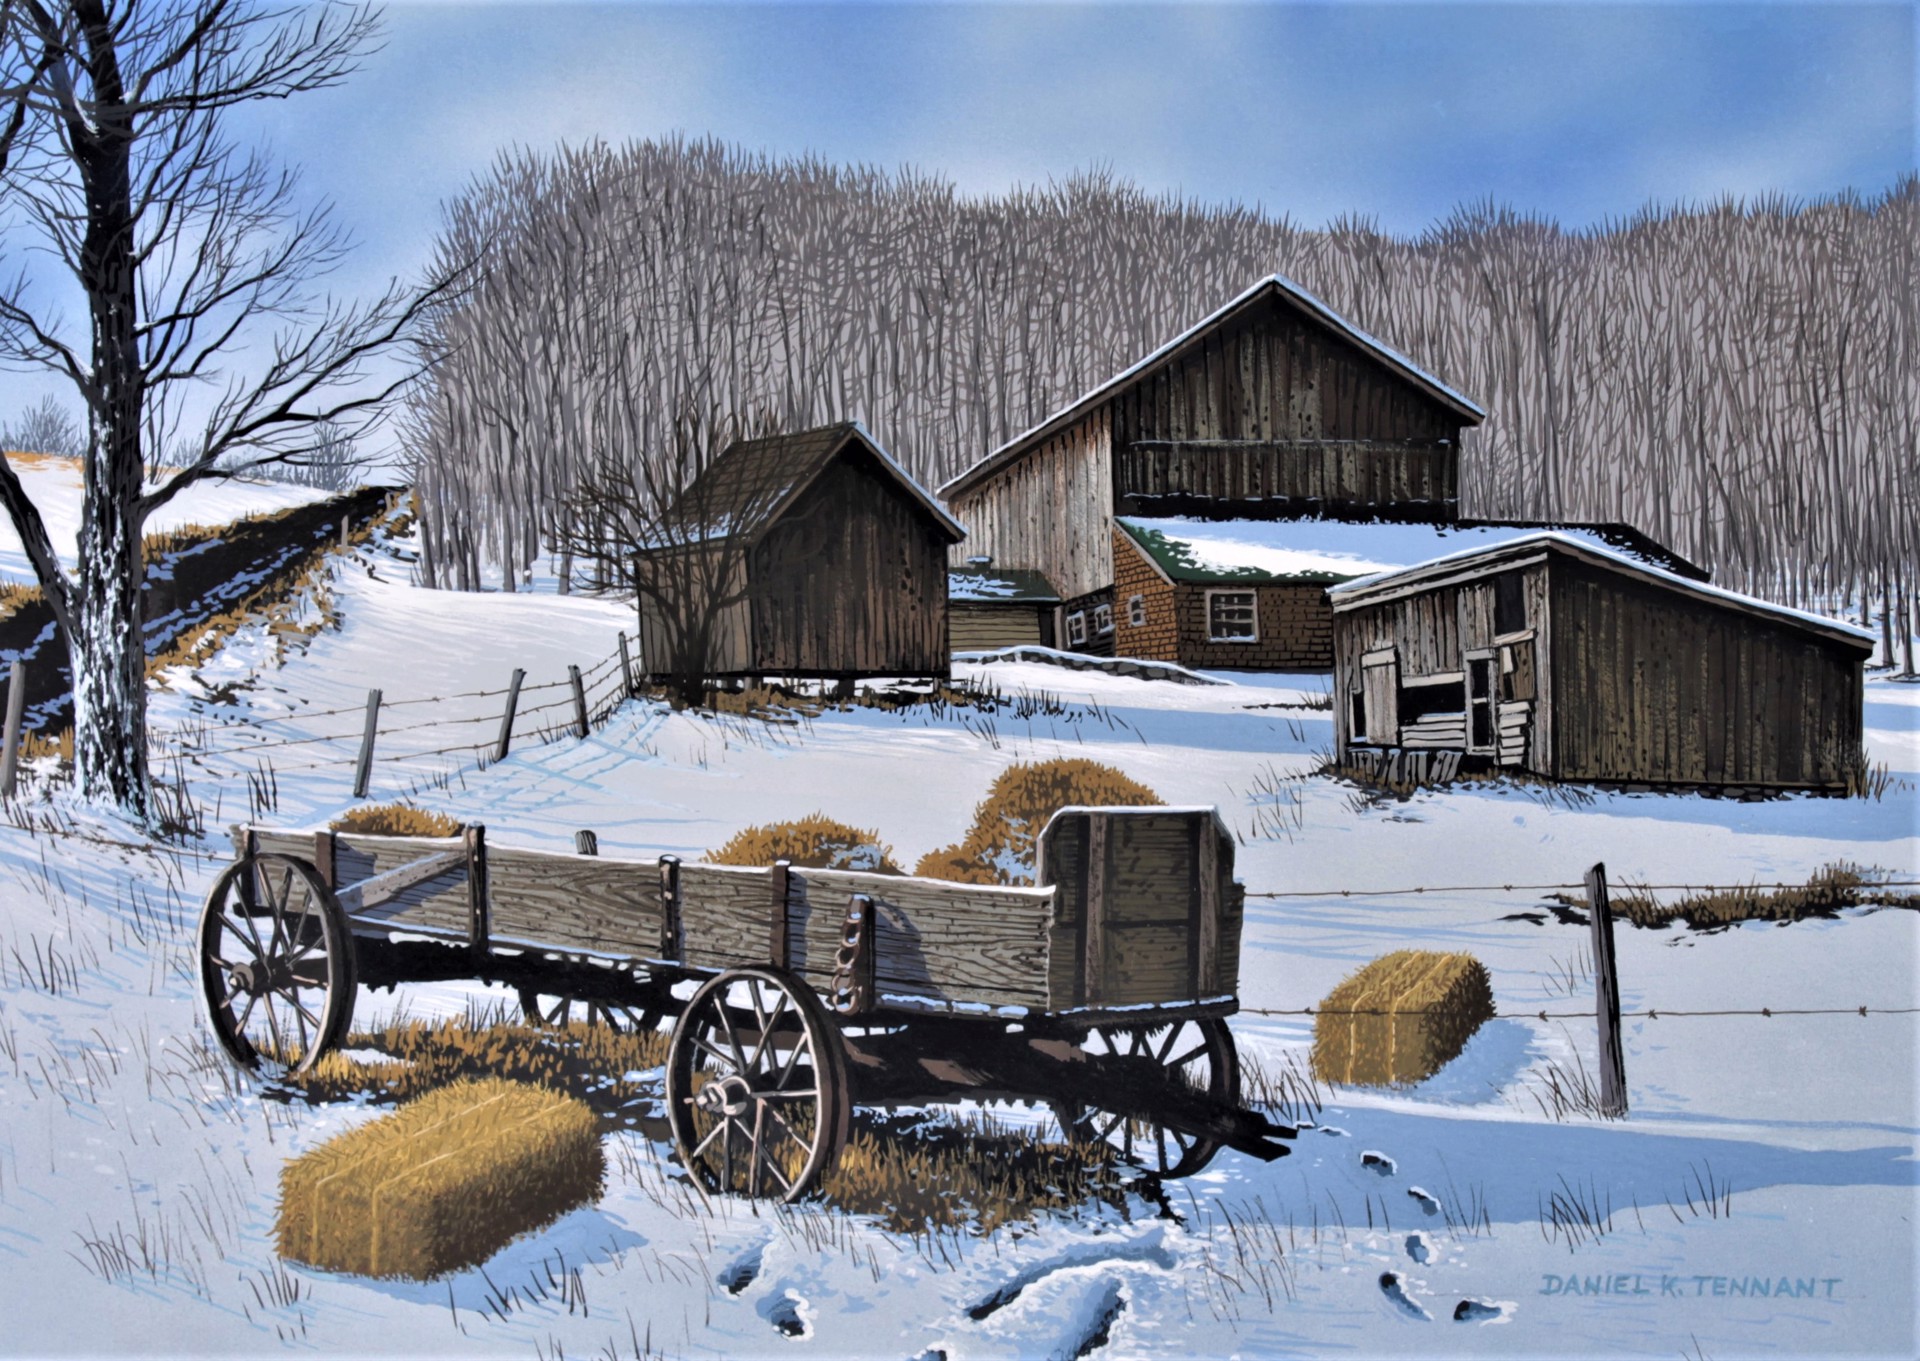 Winter Bales by Daniel K. Tennant